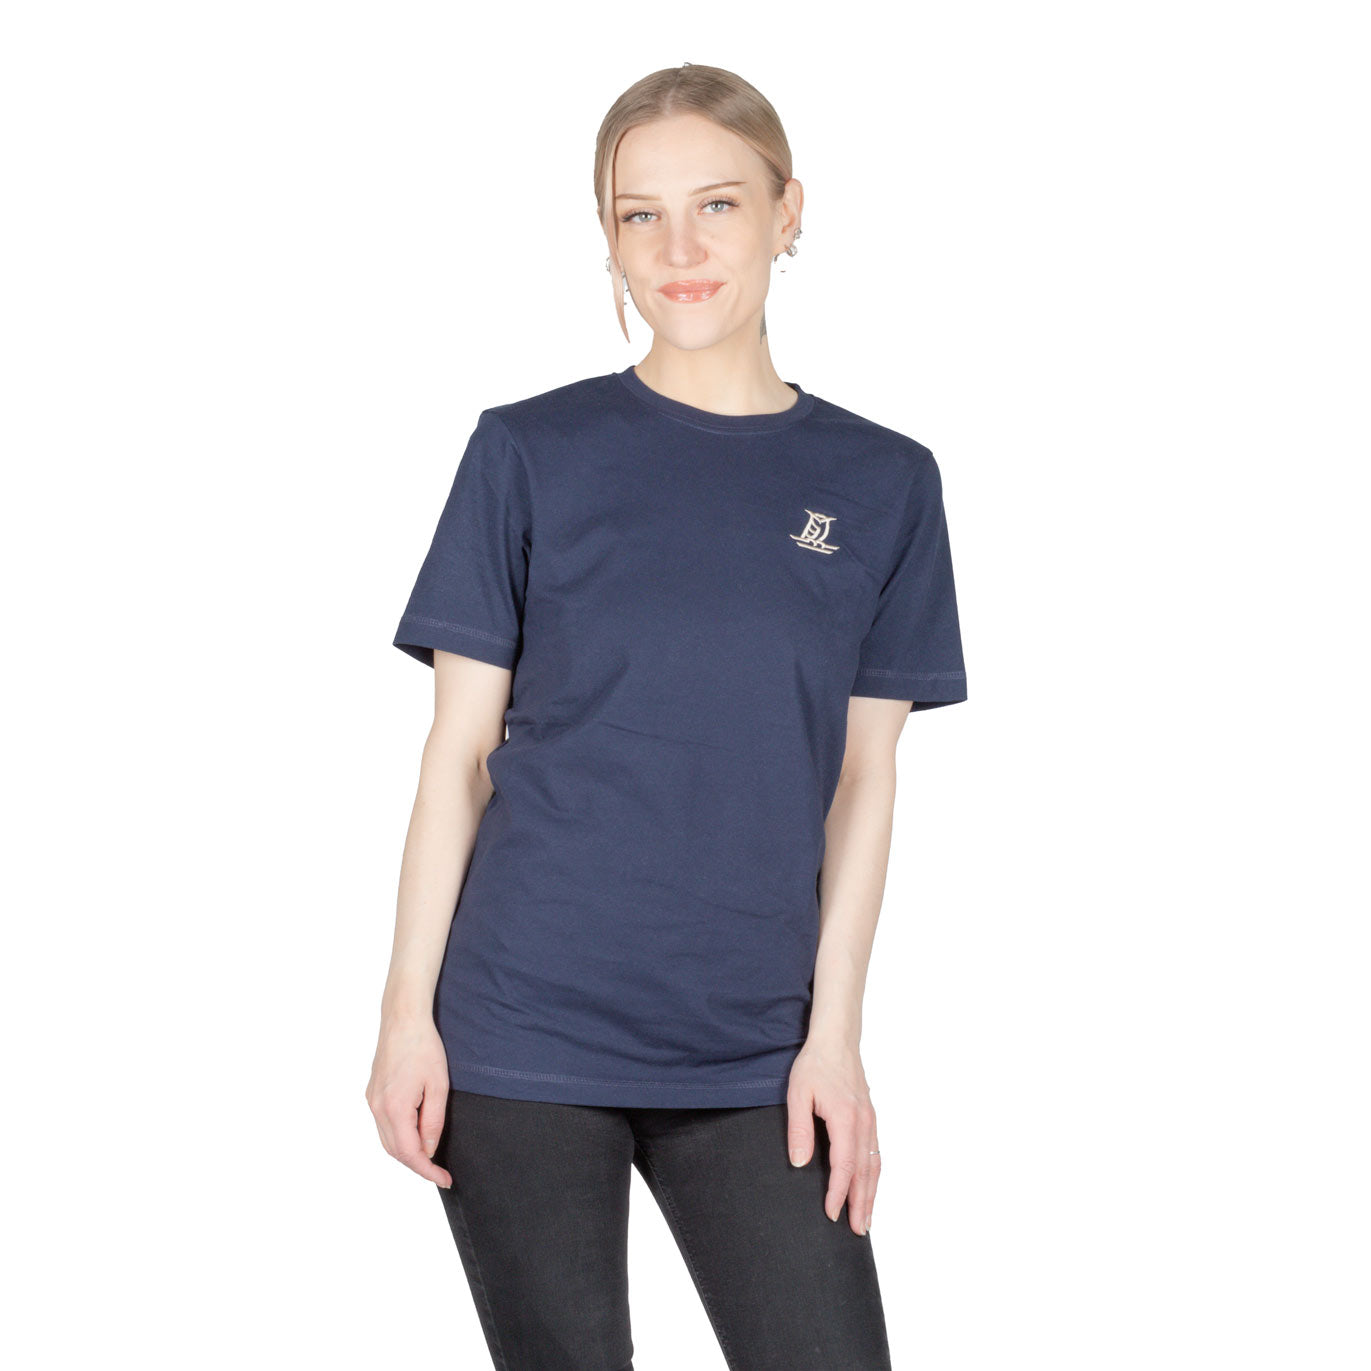 Bubi T-shirt, Navy Blue